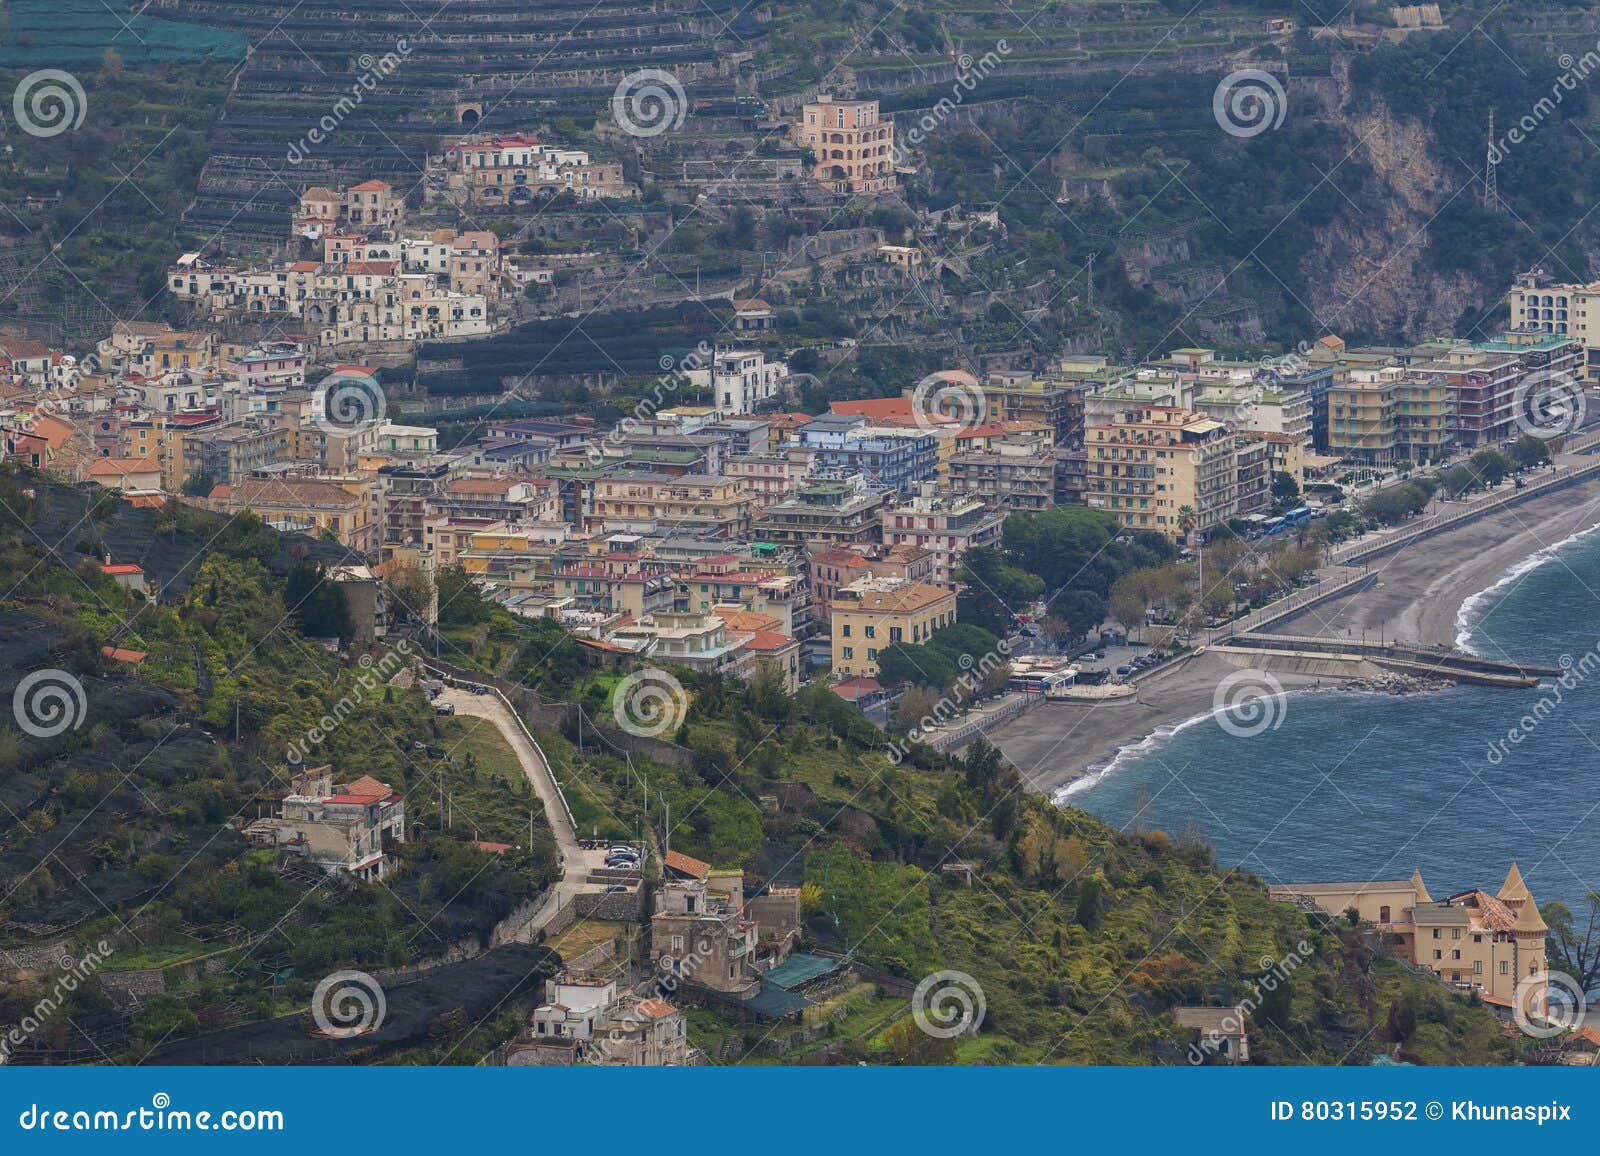 beautiful scenic of amalfi coastal south italy important traveling destination in mediterranian sea